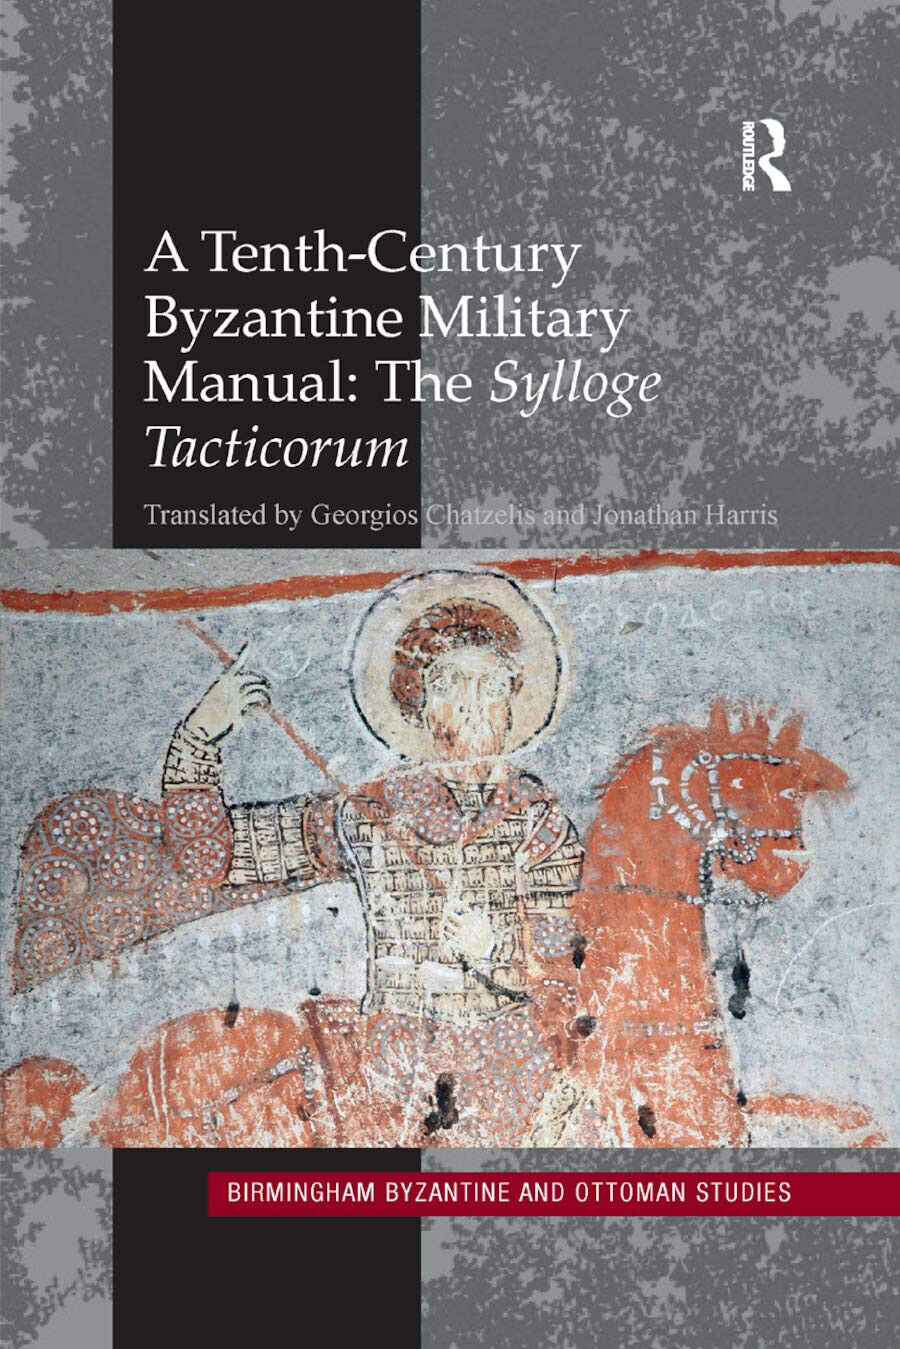 A Tenth-century Byzantine Military Manual: The Sylloge Tacticorum - 2019